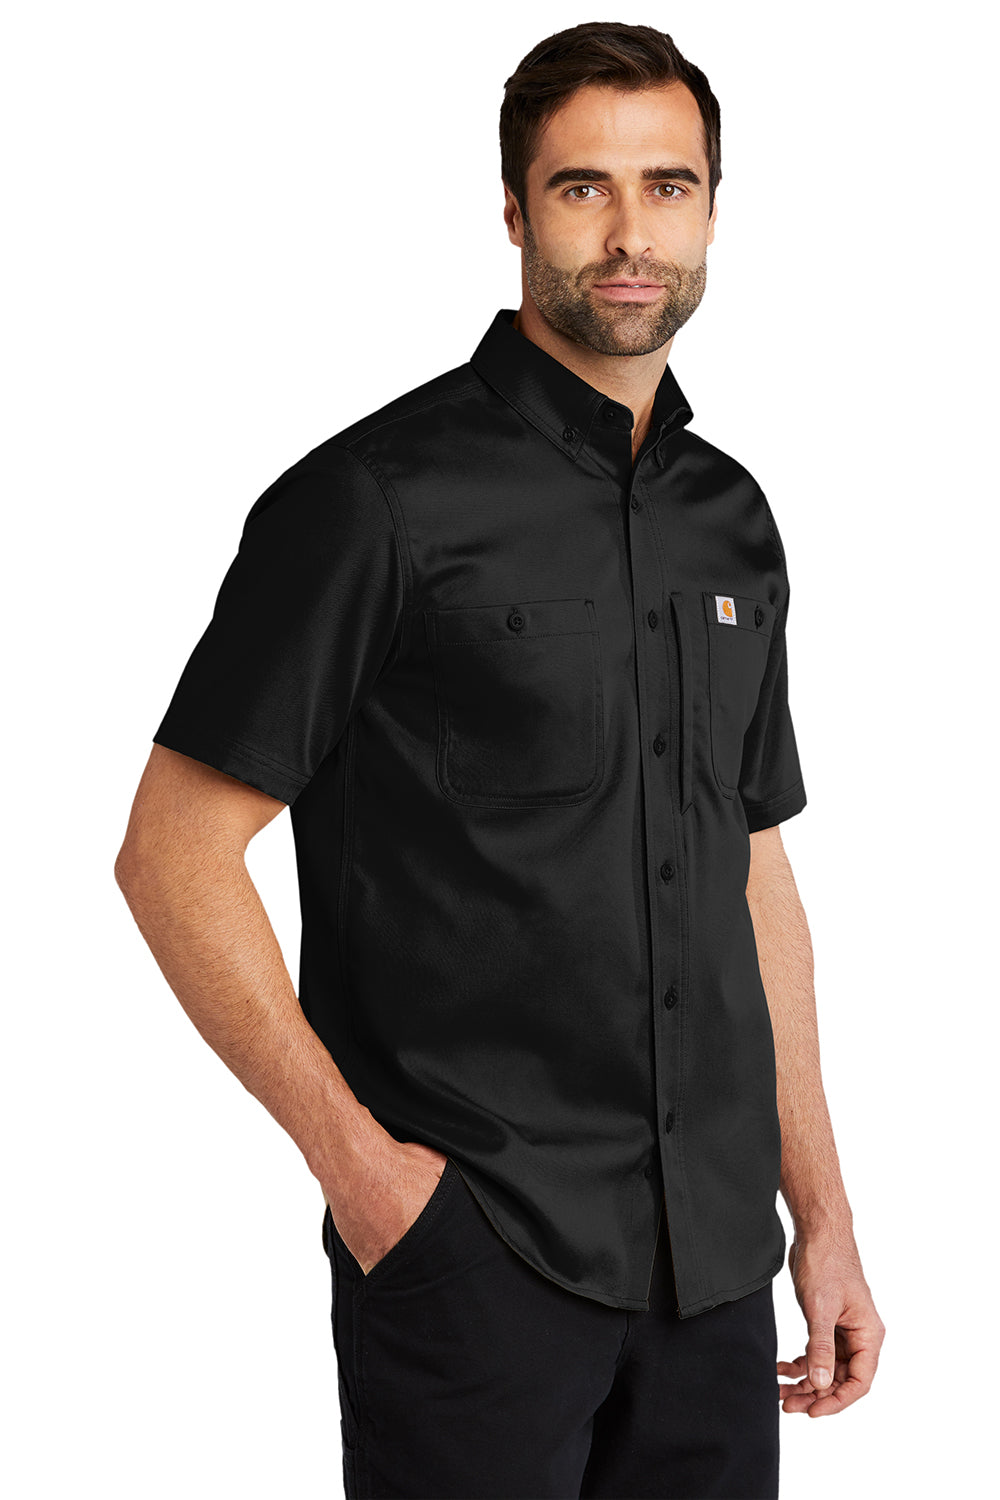 Carhartt CT102537 Mens Rugged Professional Series Wrinkle Resistant Short Sleeve Button Down Shirt w/ Pocket Black Model 3Q